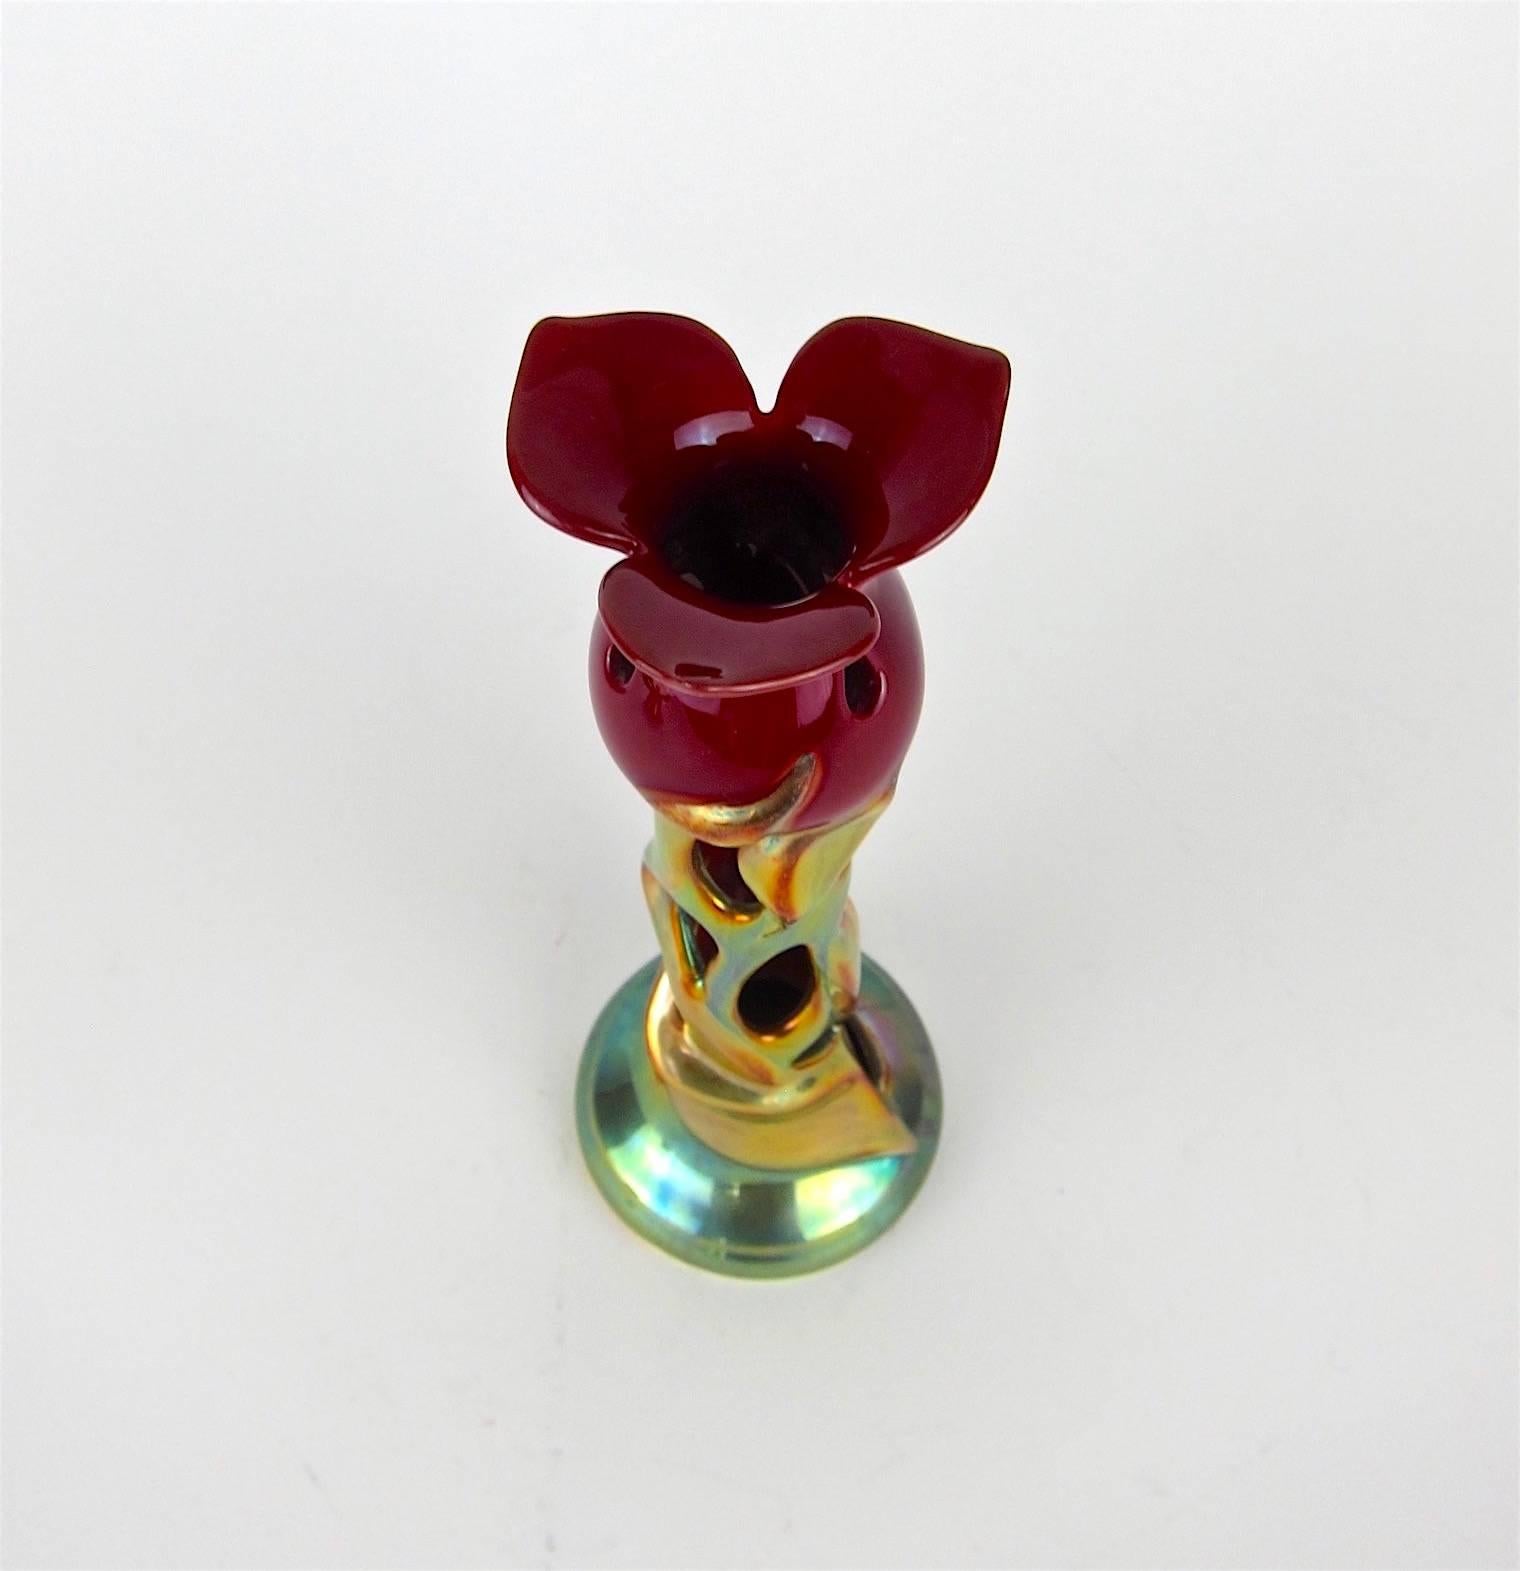 Zsolnay Art Nouveau Porcelain Tulip Candlestick with Eosin Glaze 2